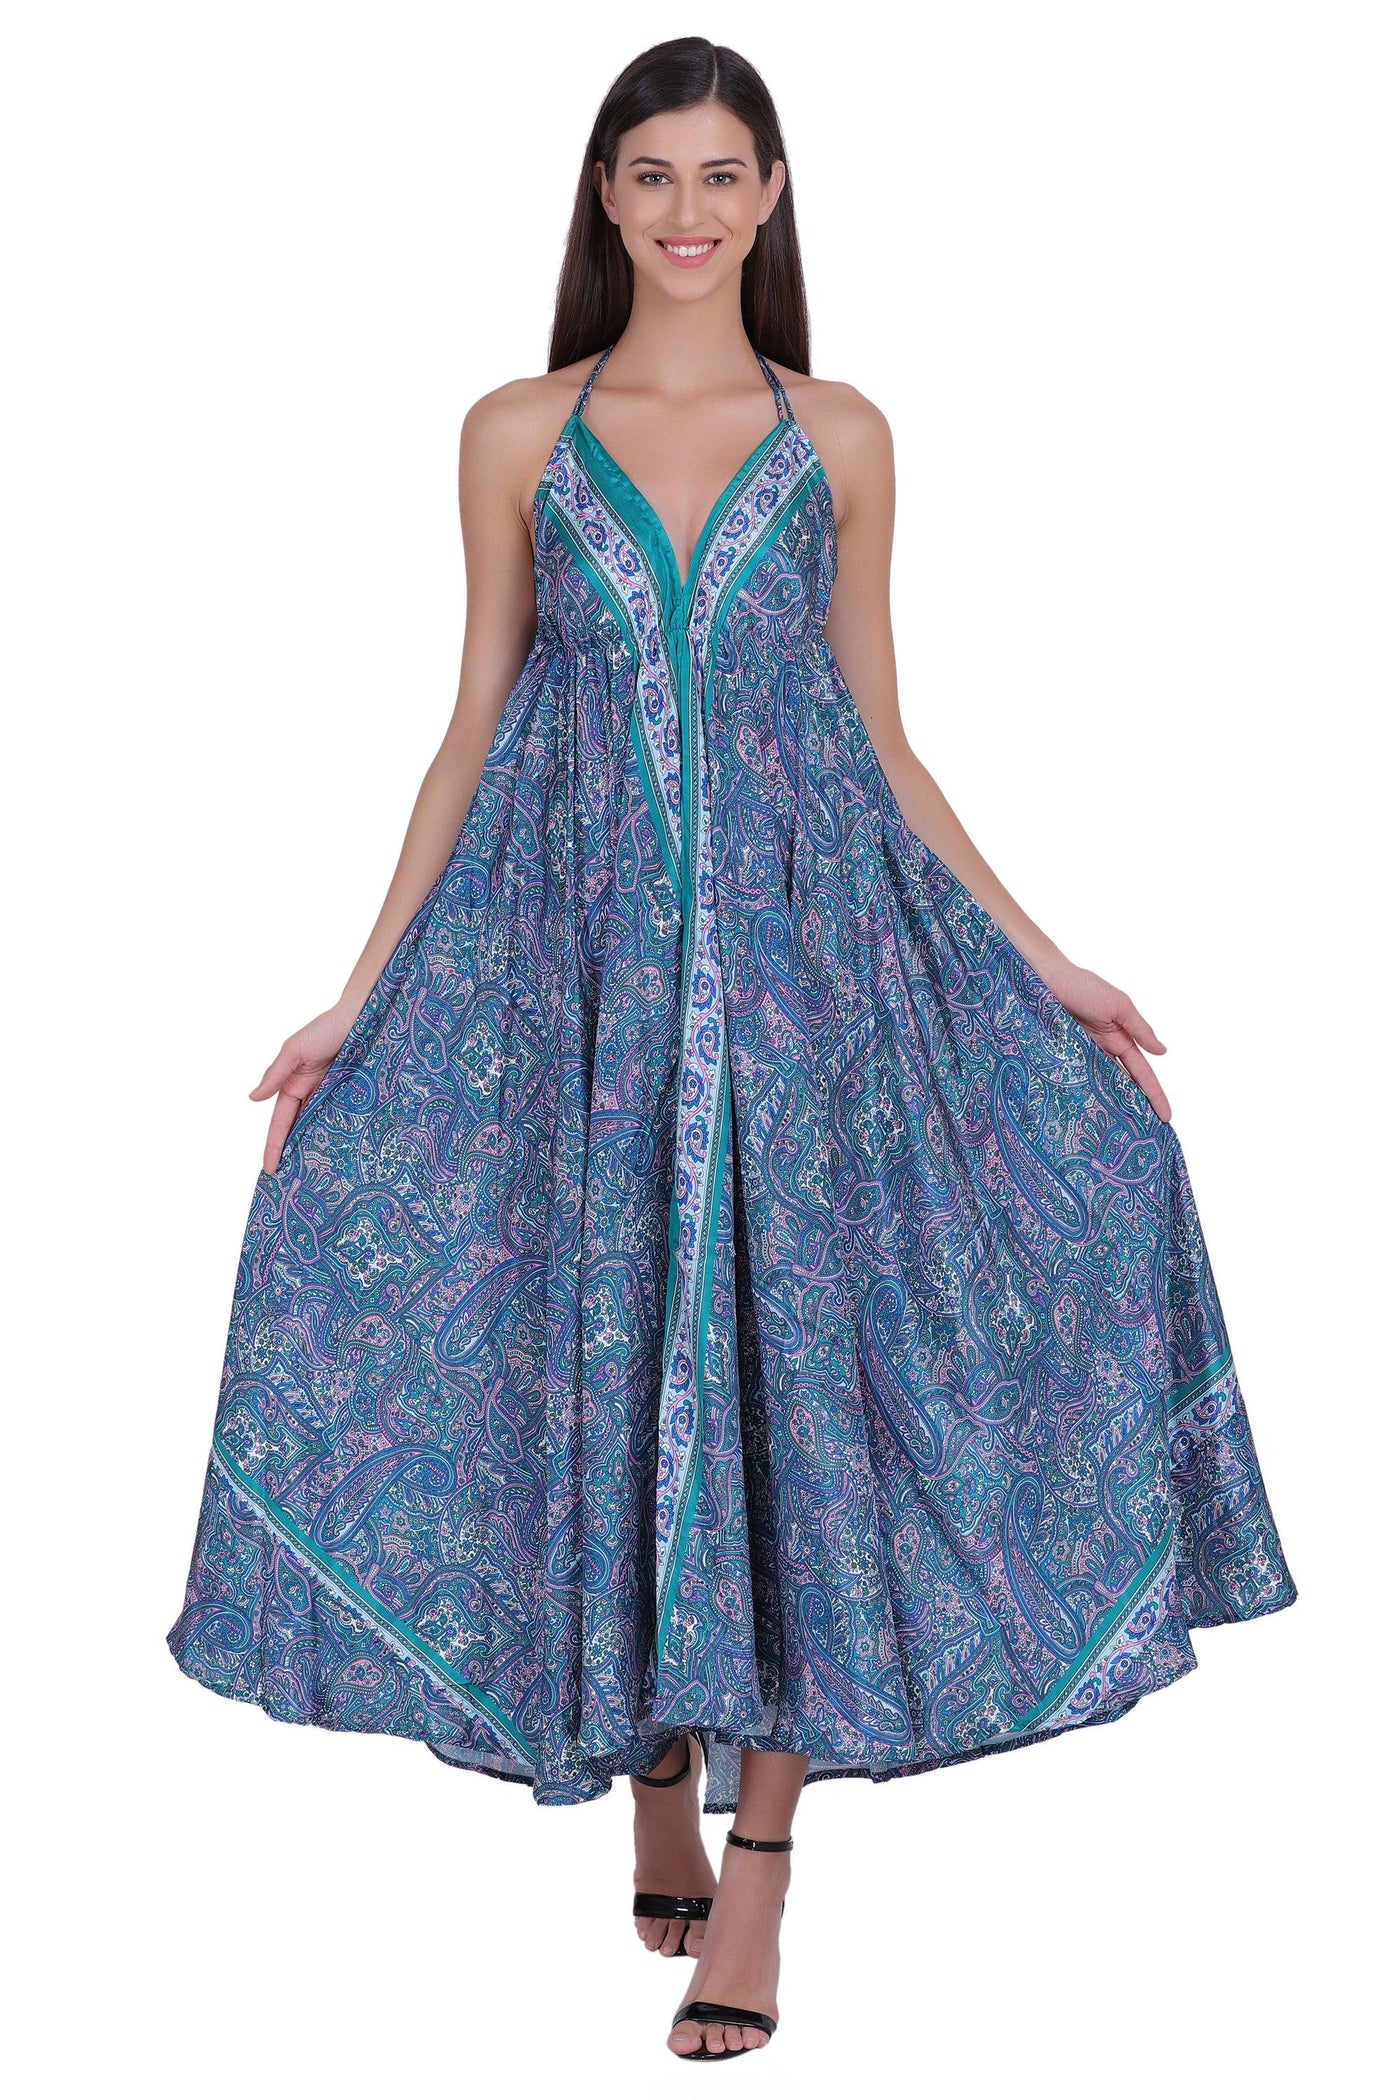 Paisley Printed Silk Dress AB23001